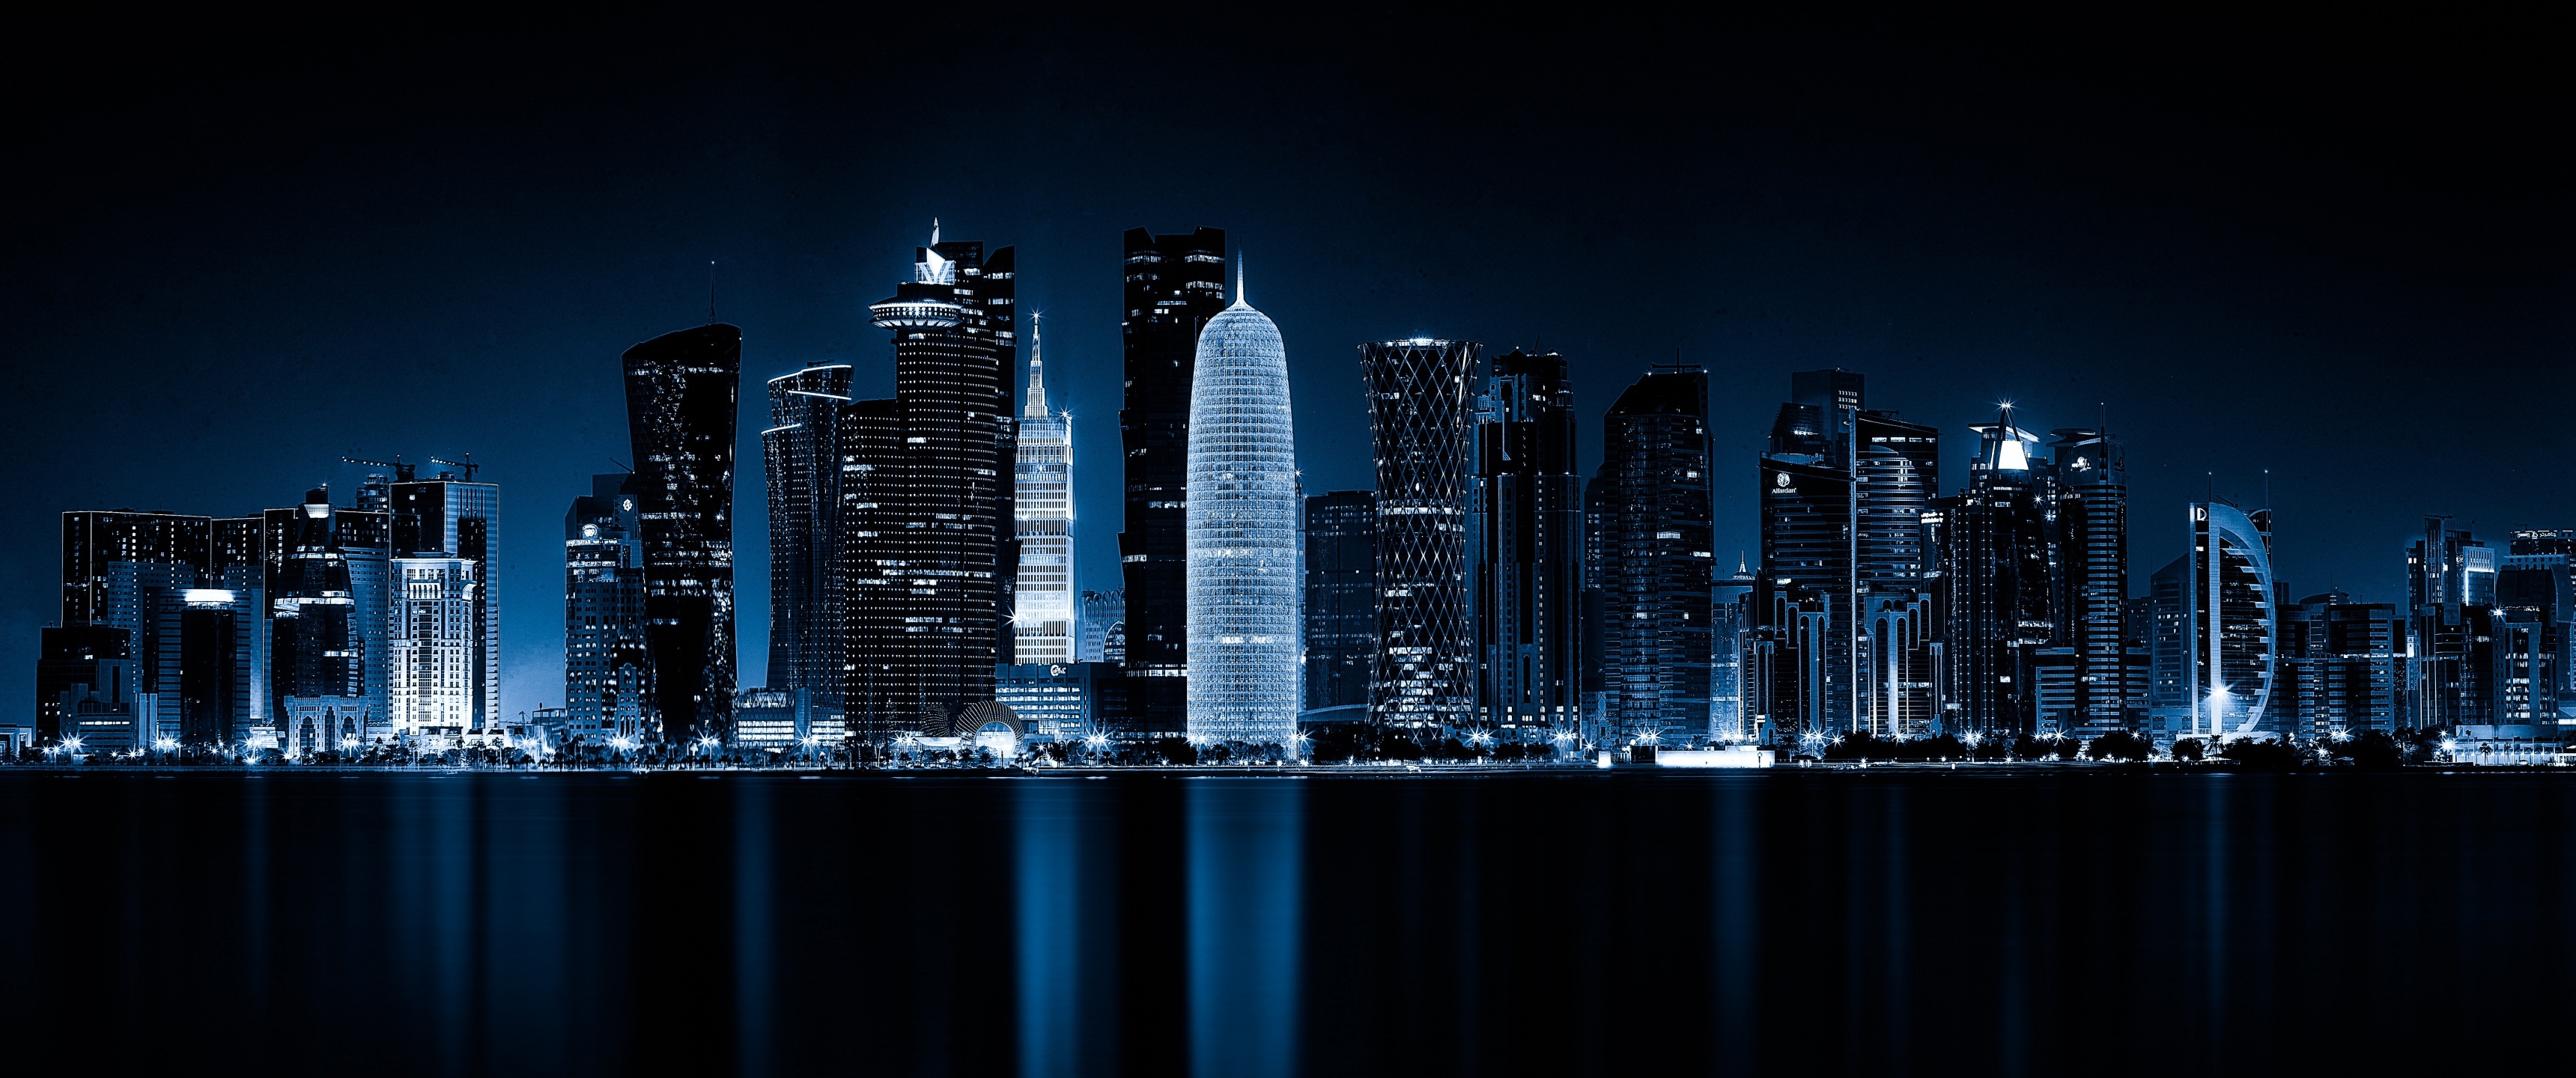 Doha, Qatar 4K wallpaper, Cityscape at night, Modern architecture, 3440x1440 Dual Screen Desktop